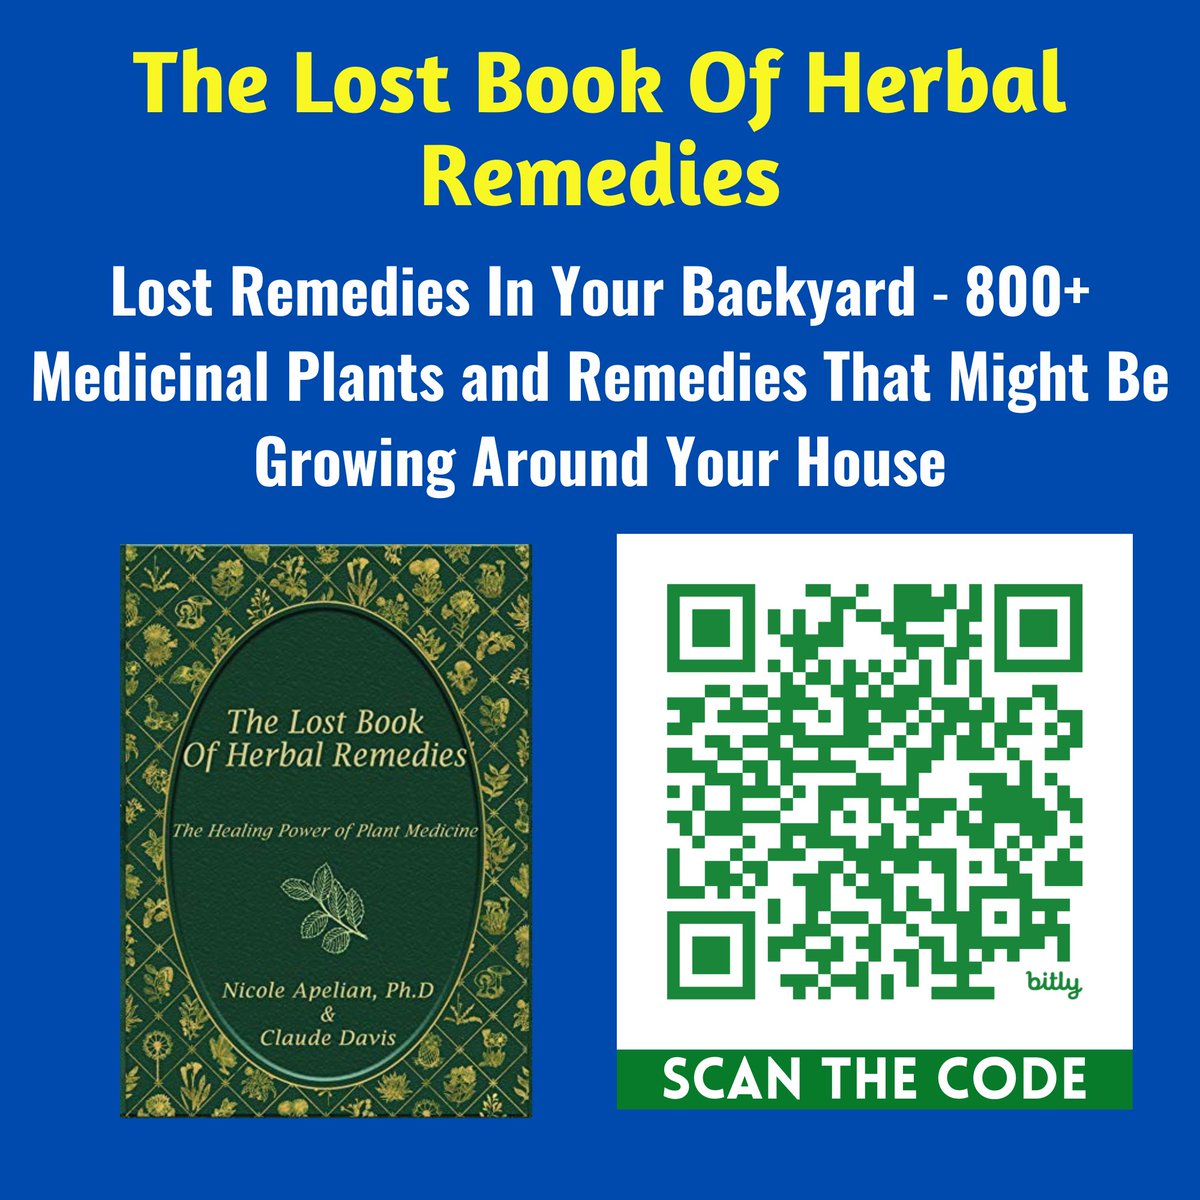 #herbal #herbalmedicine #herbalremedies #alternativeremedies #alternativemedicine #health #healthylifestyle #HealthyLiving #longevity #antiagingmedicine #nutritioneducation #wellness #healing